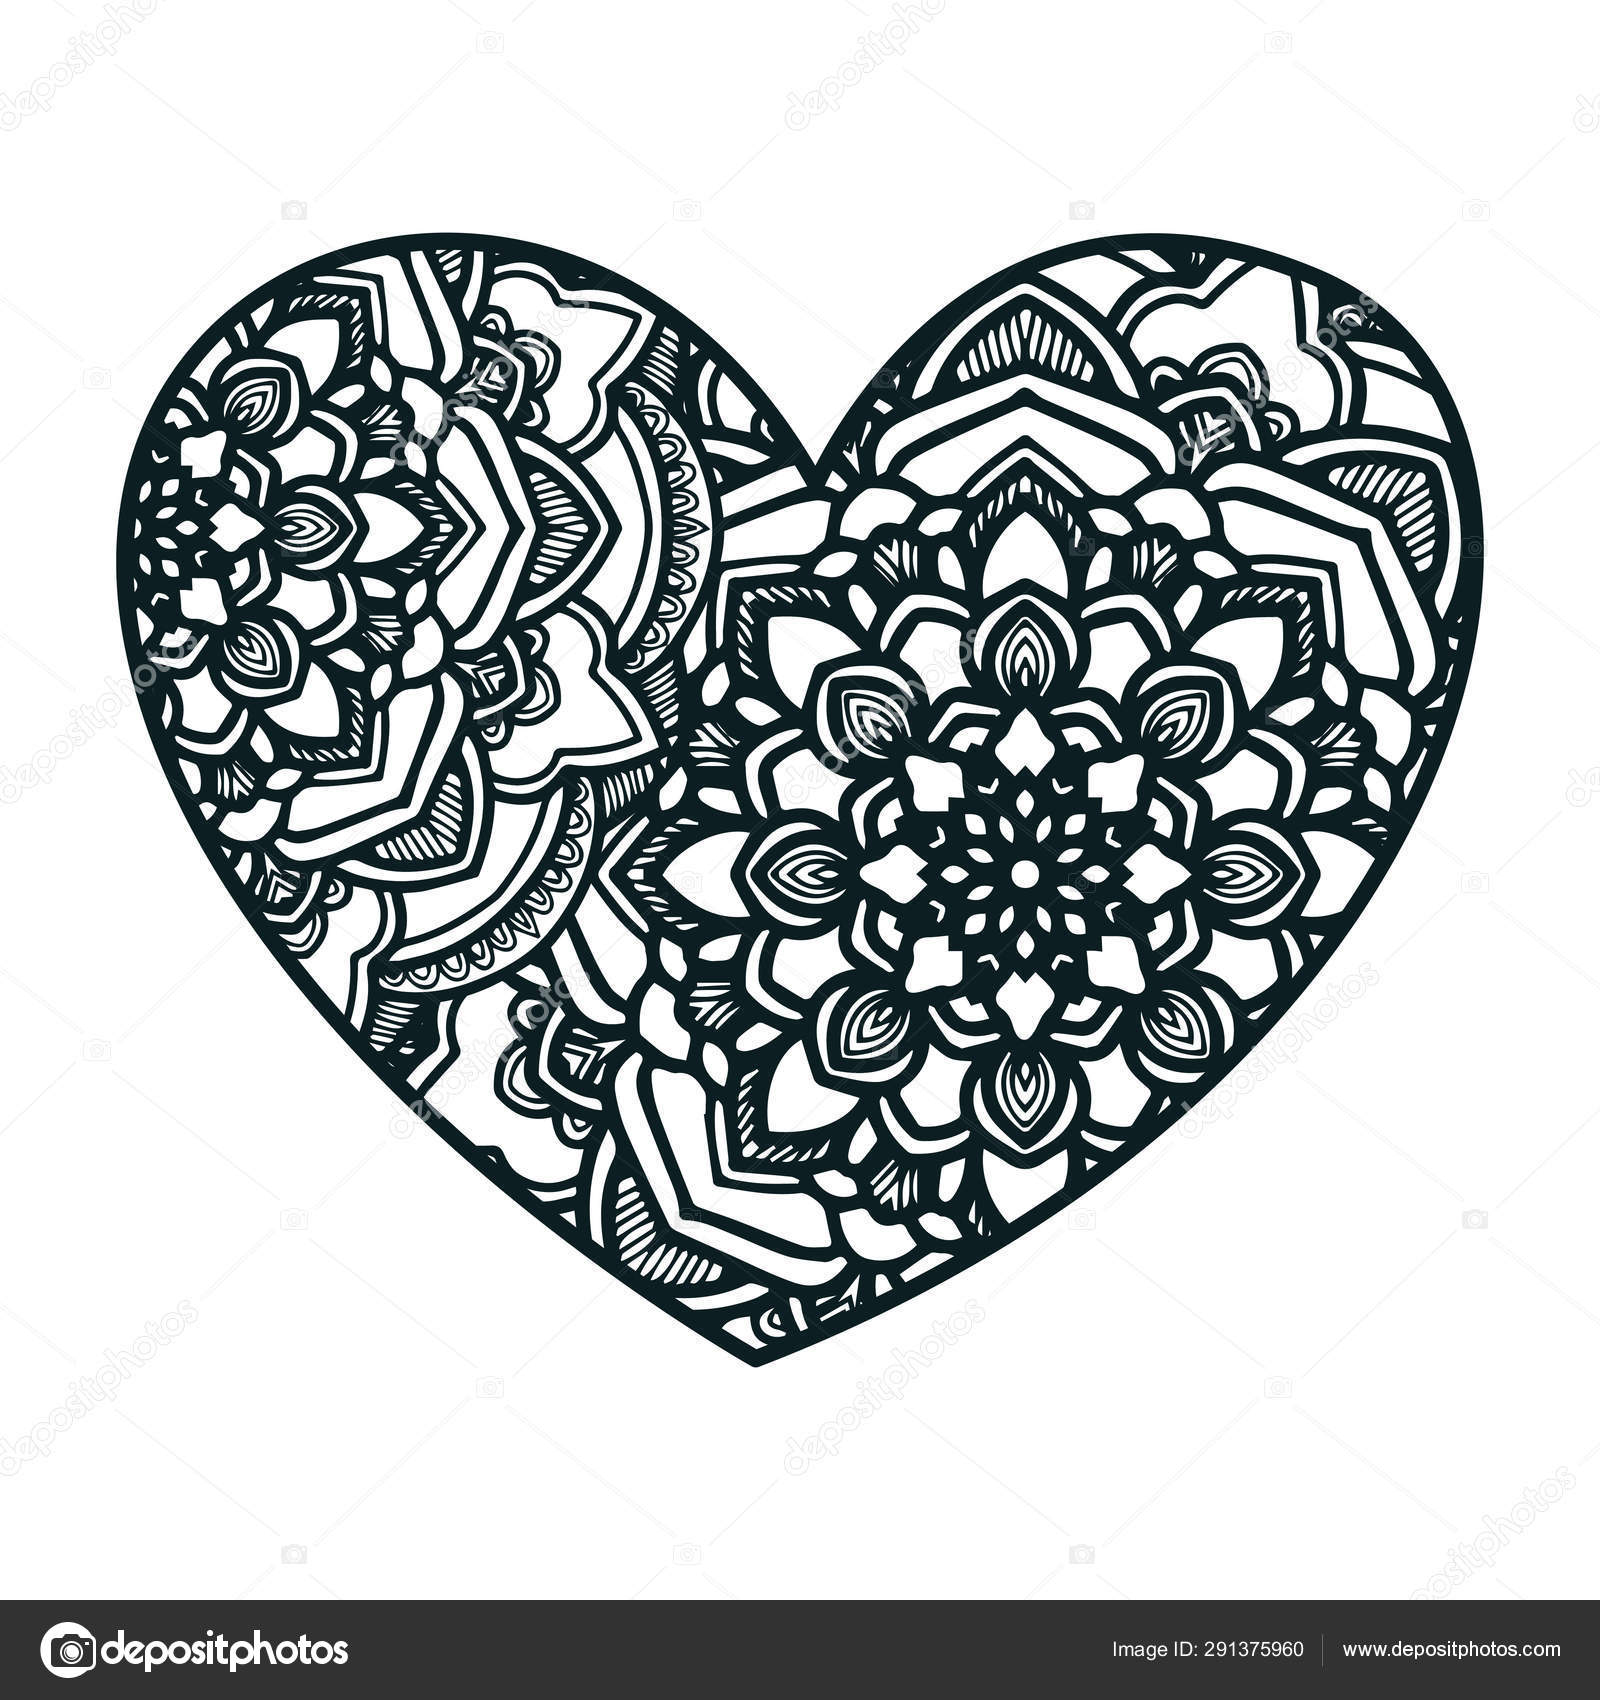 Download Mandala art with heart shape. Mandala black and white ...